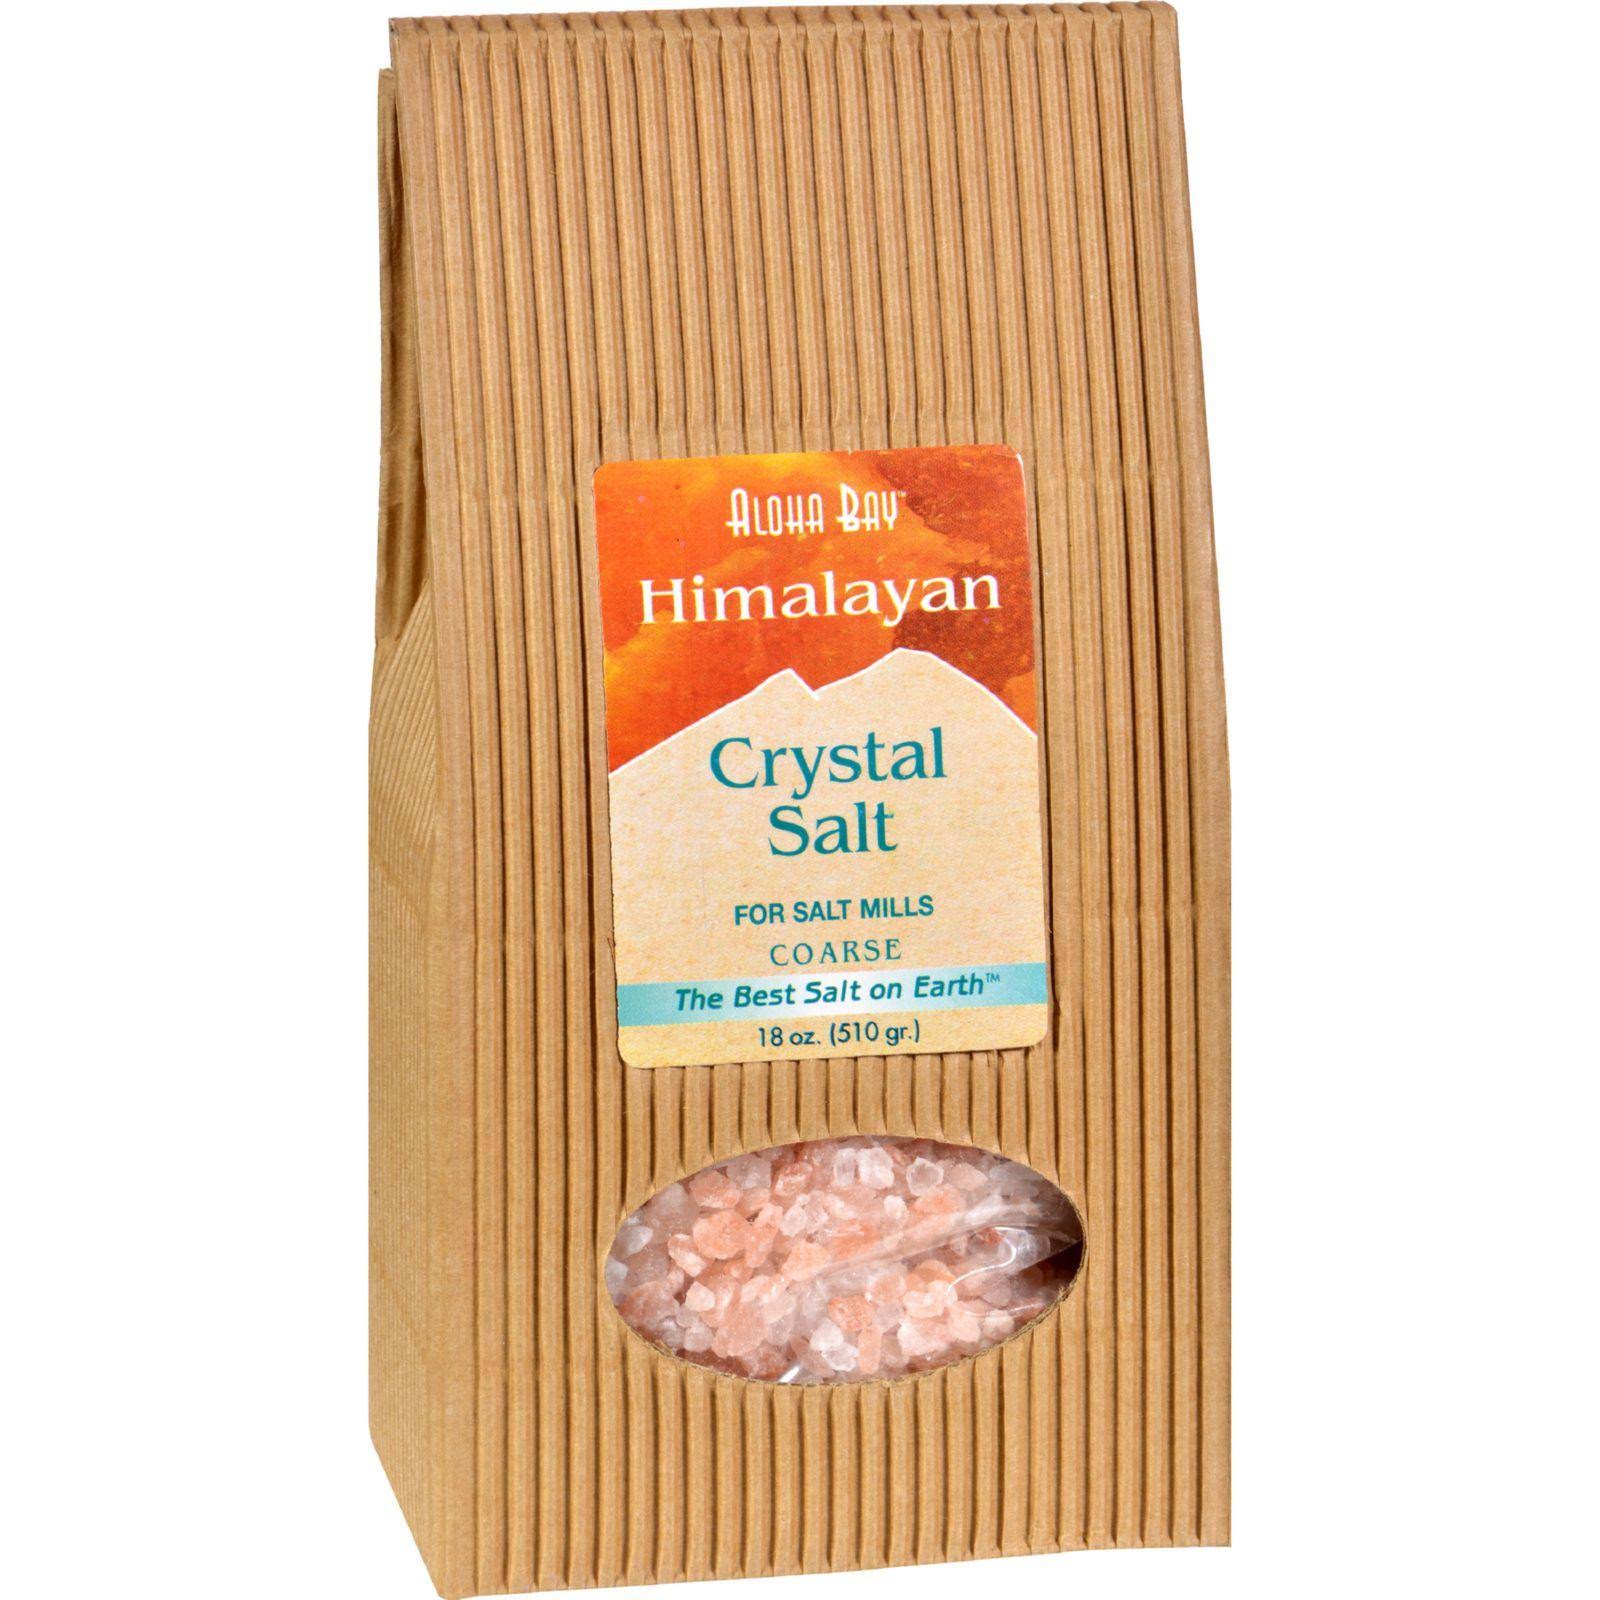 Himalayan Coarse Crystal Salt - 510g